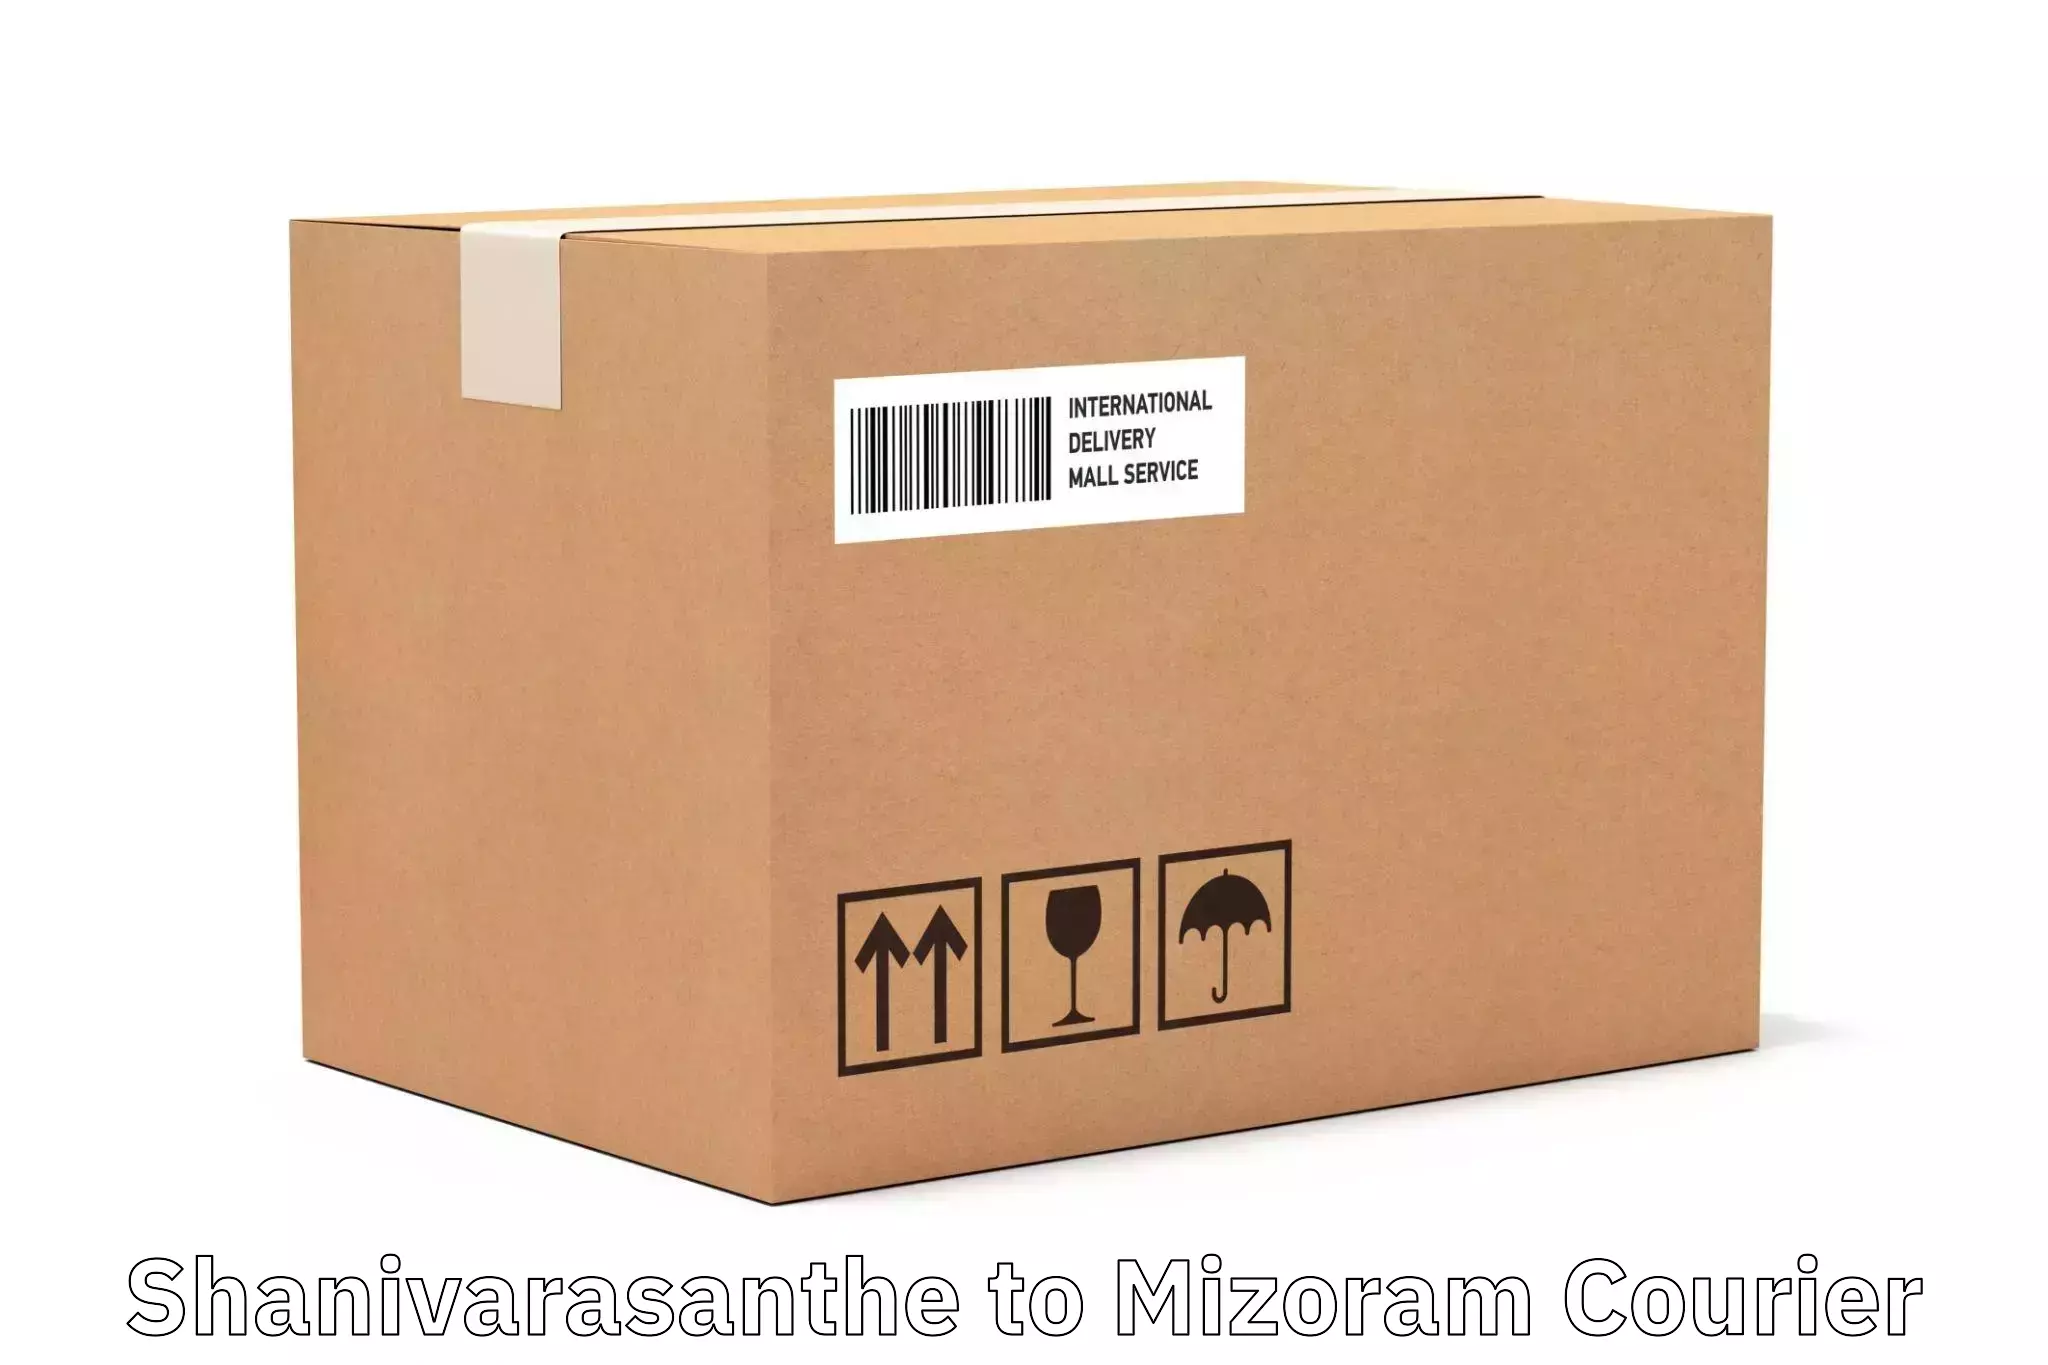 Customer-centric shipping Shanivarasanthe to Mizoram